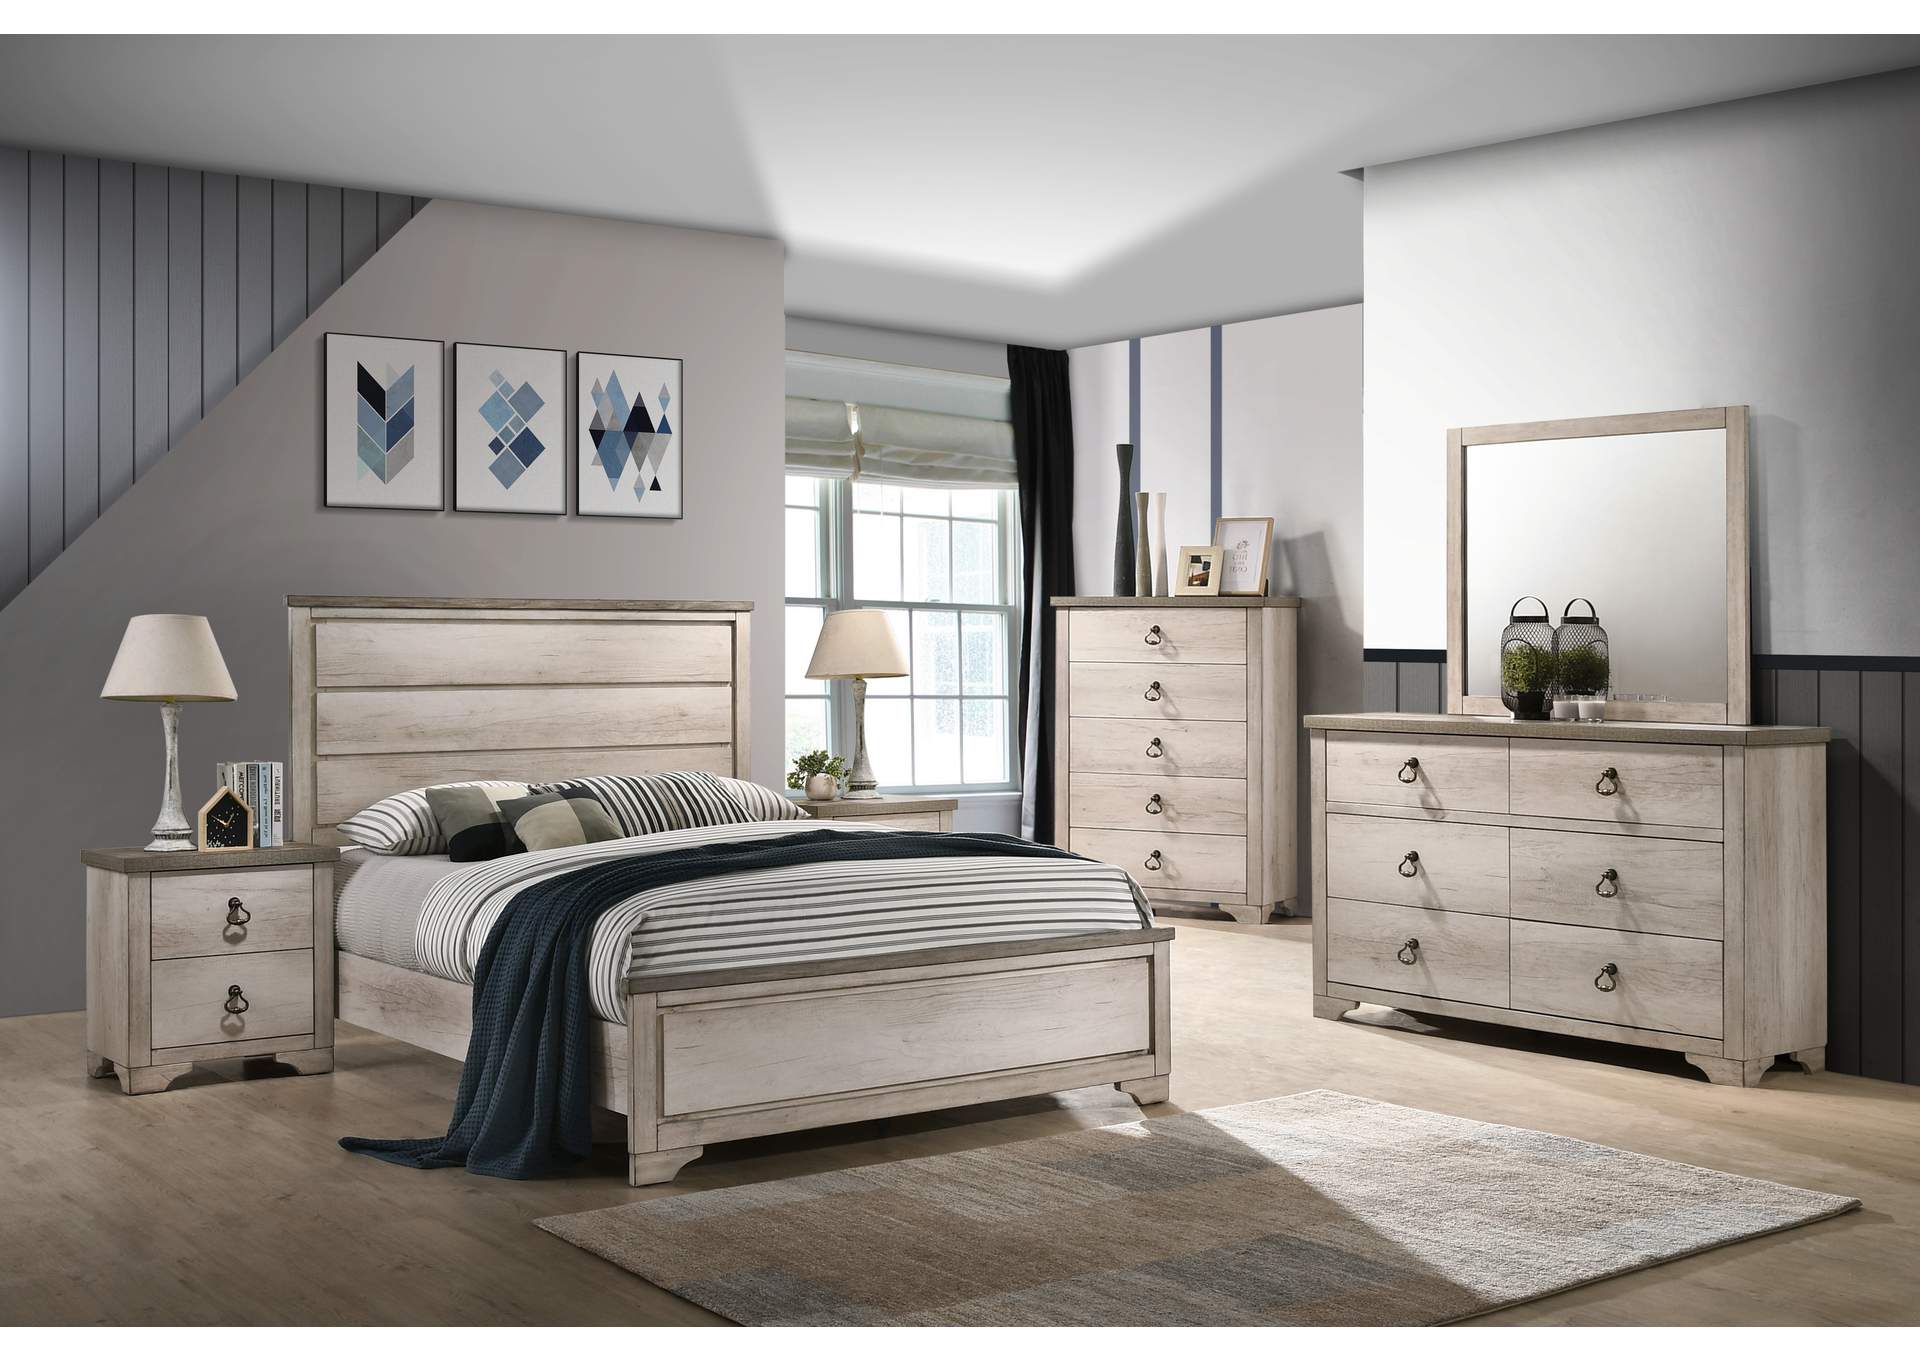 Patterson Full Bed W/ Dresser, Mirror, Nightstand, Chest,Crown Mark